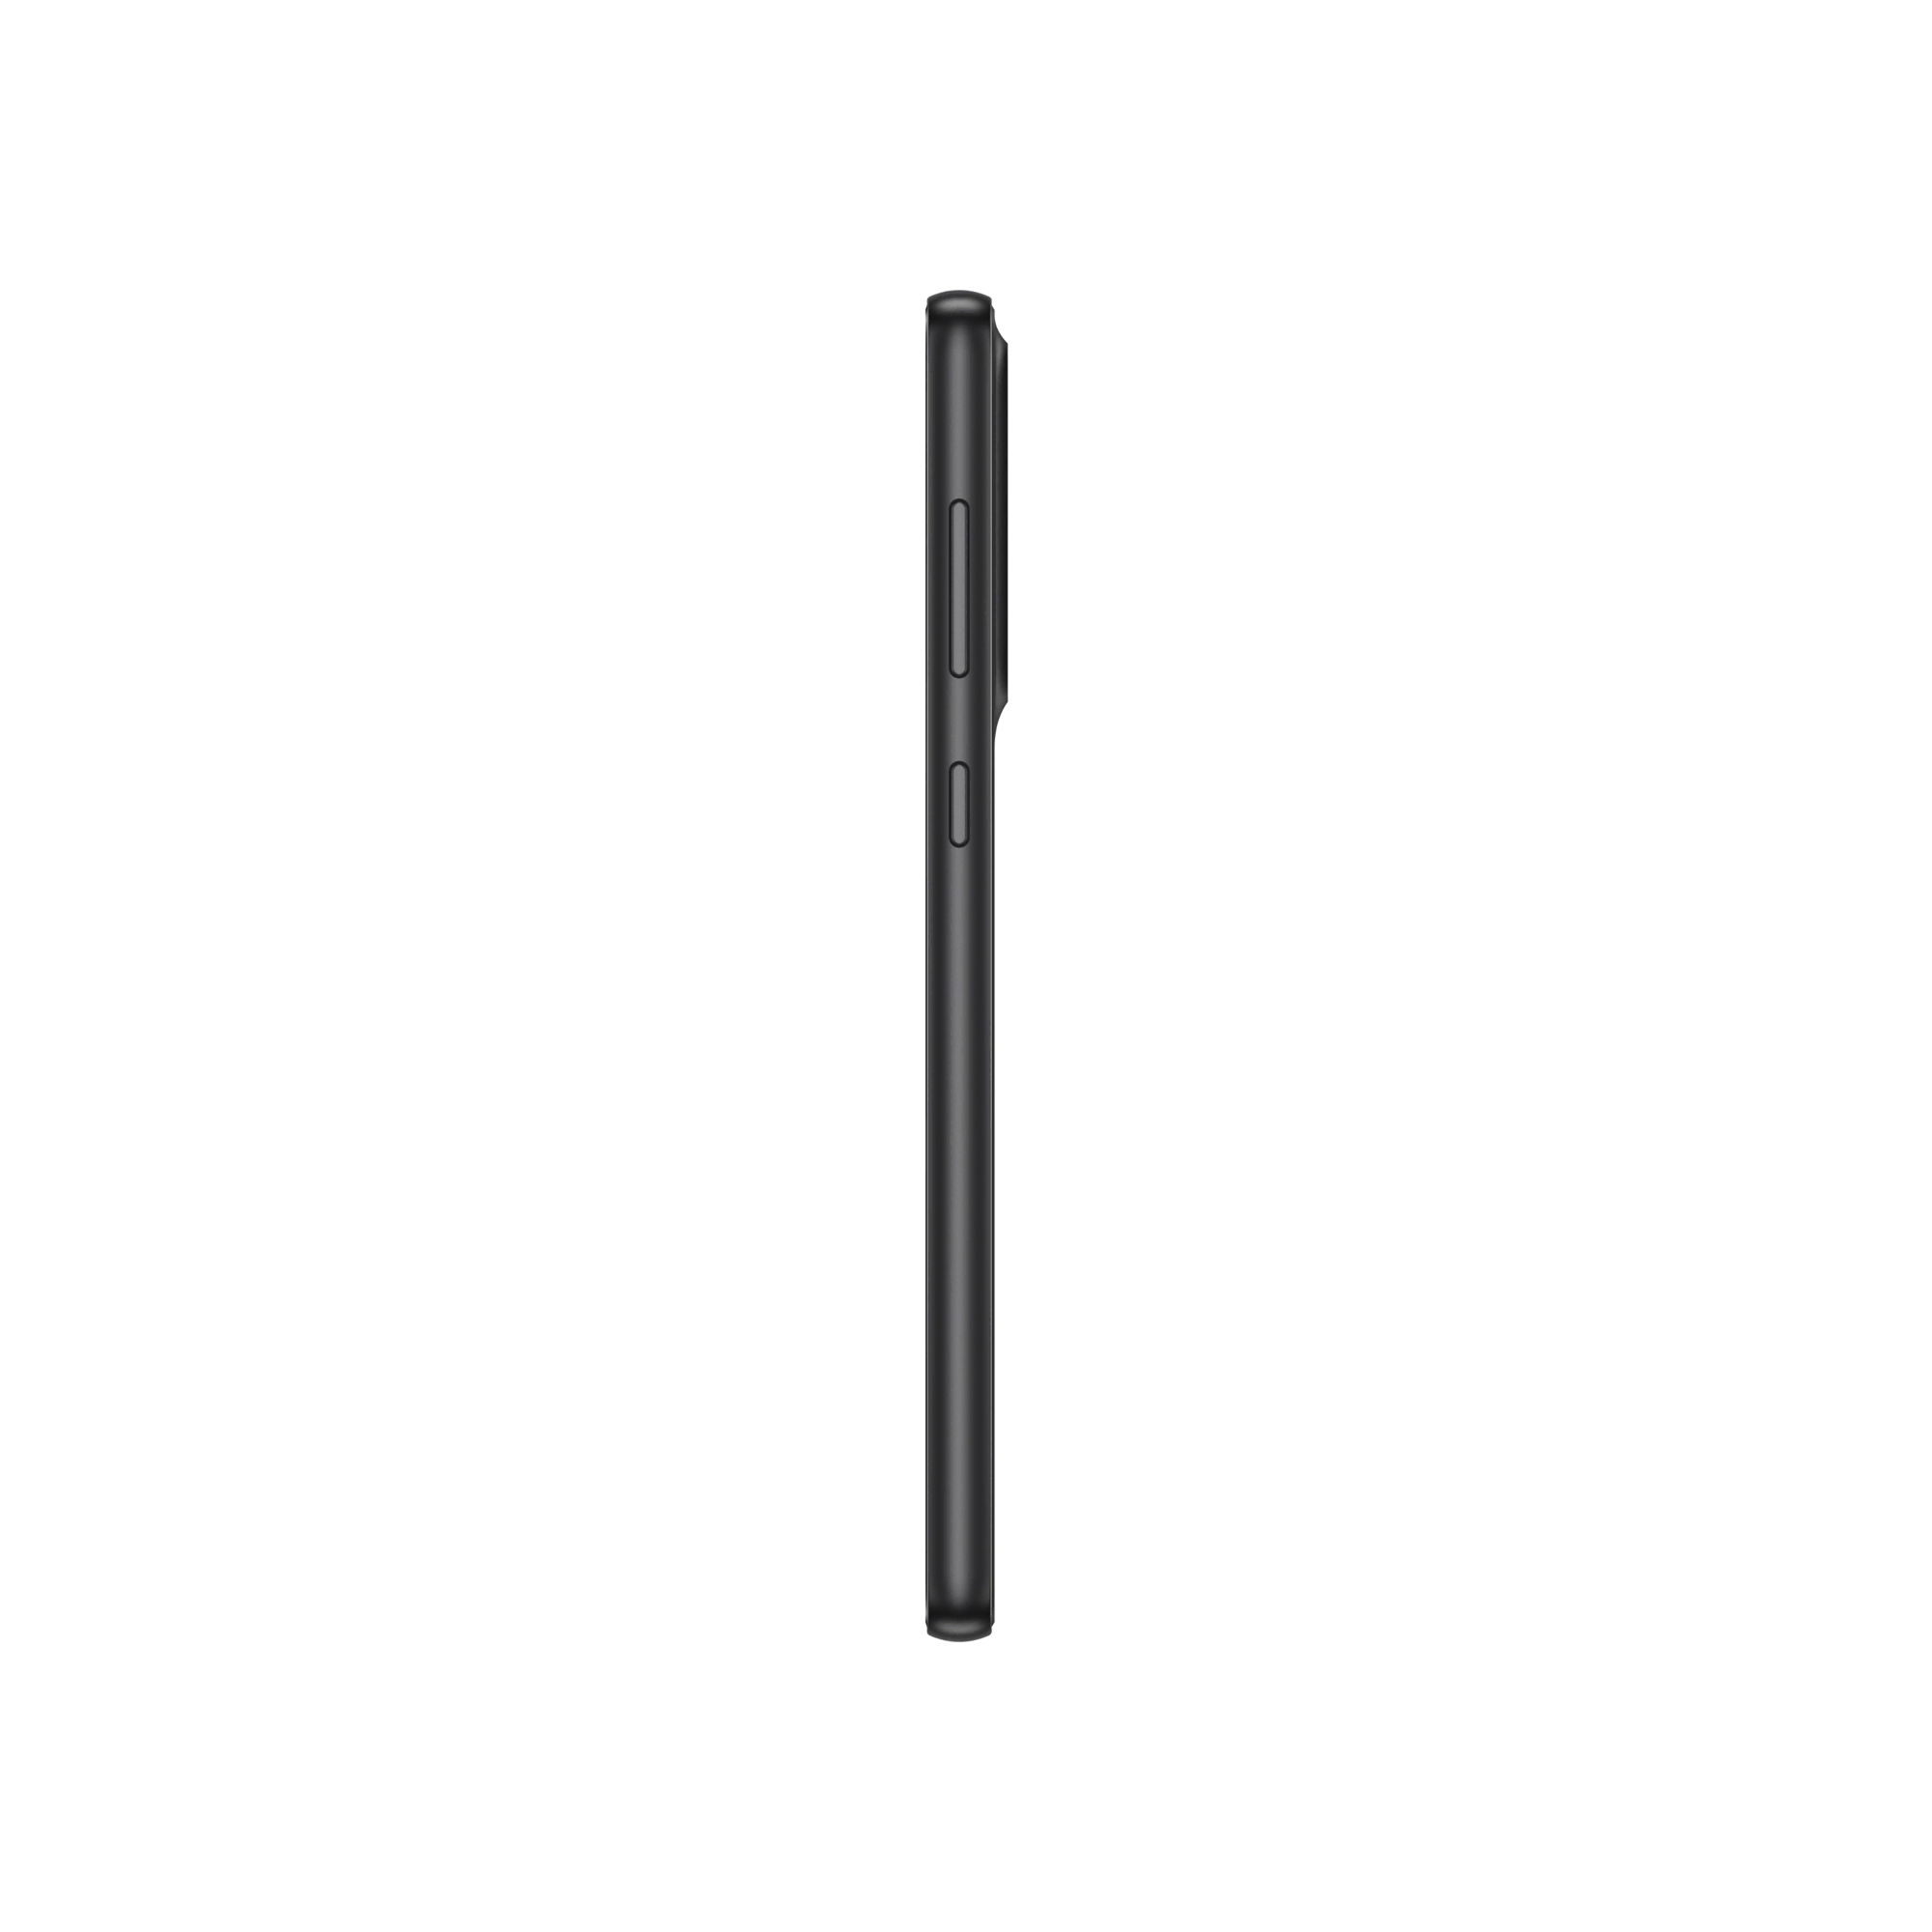 SAMSUNG Galaxy A33 5G 128GB Siyah Android Telefon Modelleri